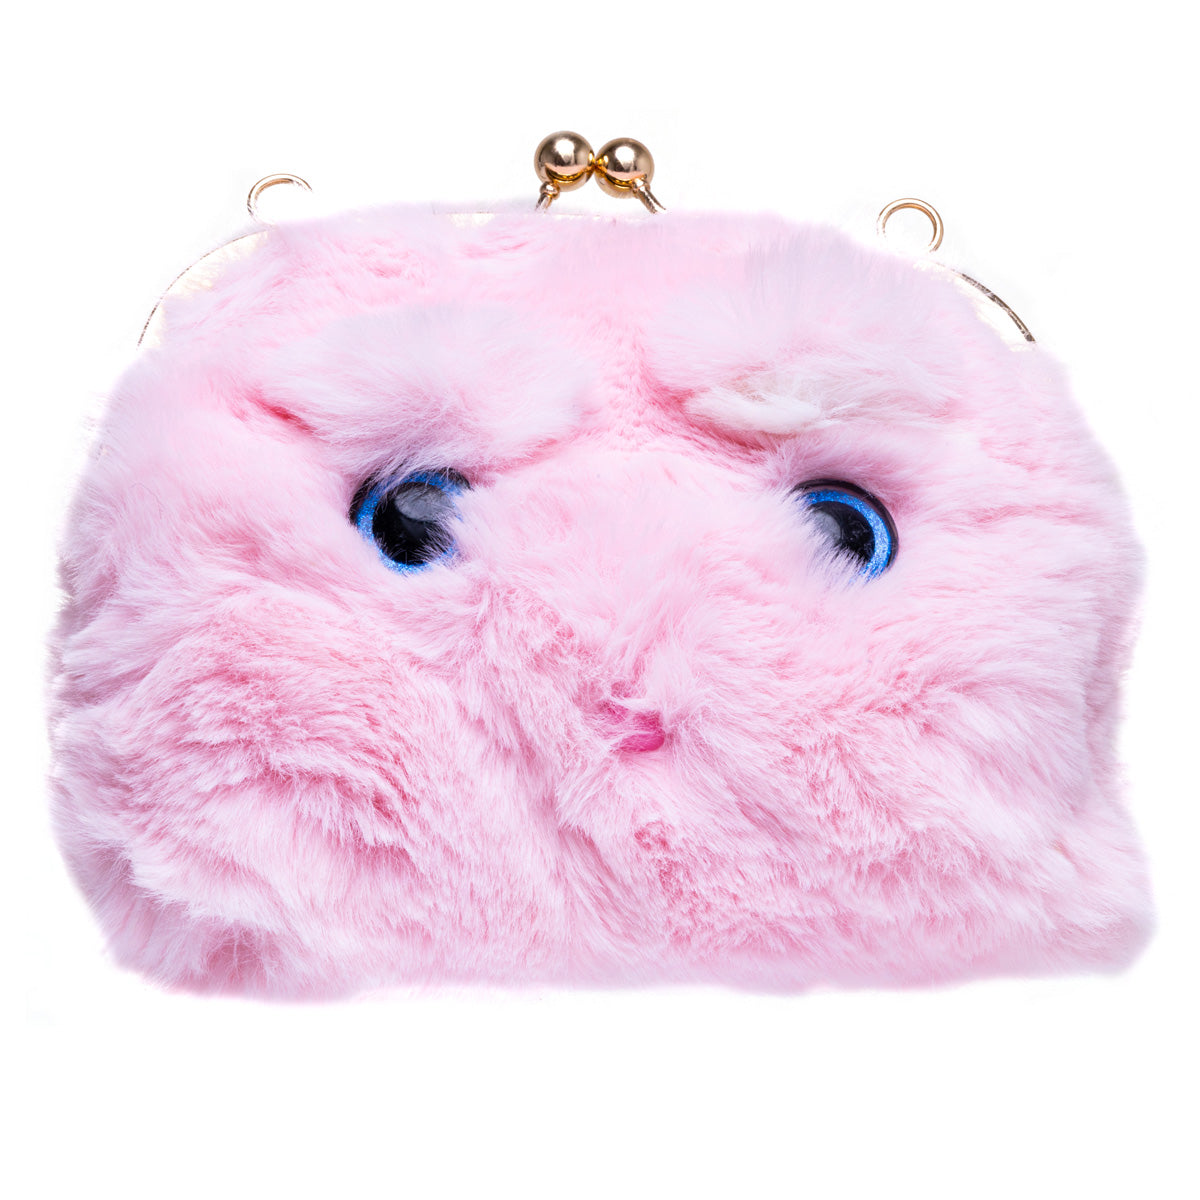 Fluffy stuffed animal big shoulder bag